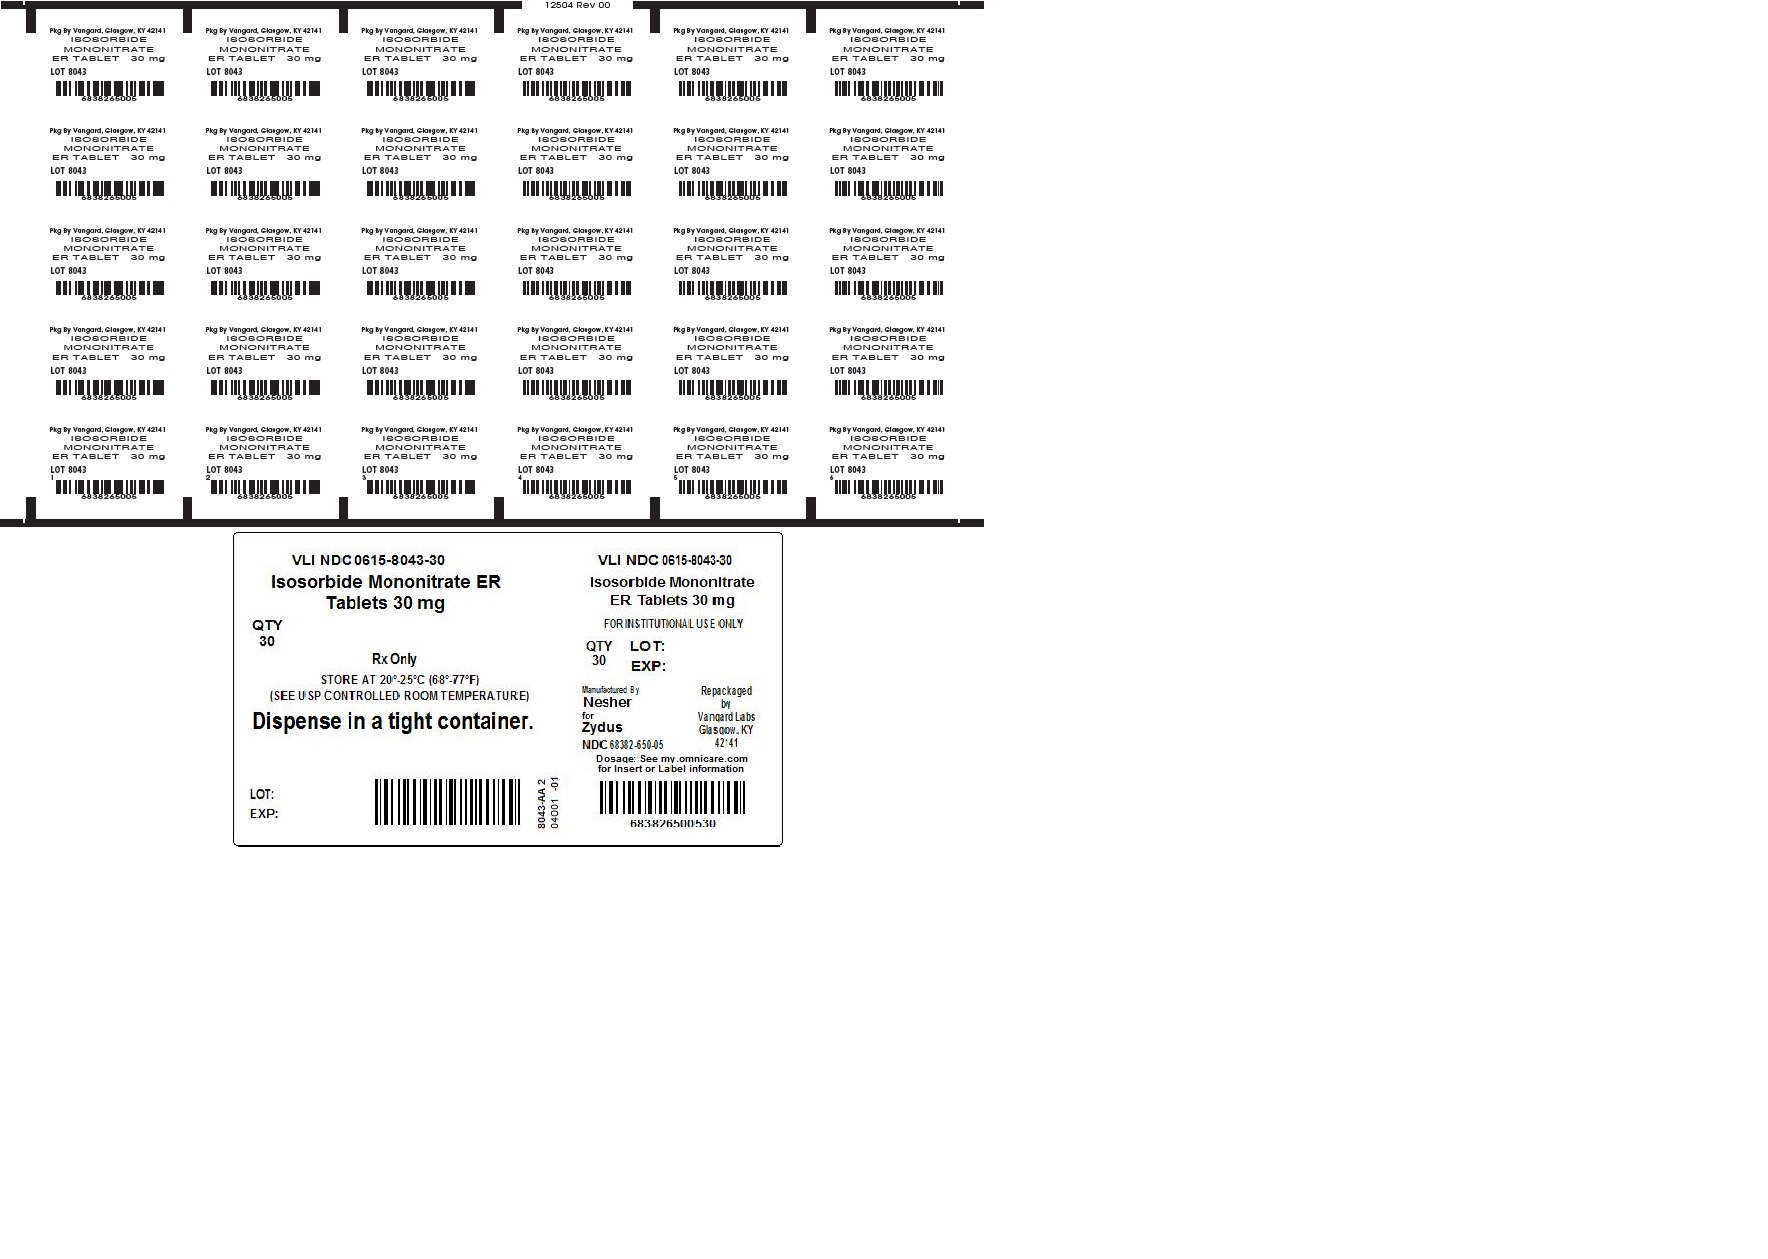 Isosorbide Mononitrate ER 30mg bingo card label